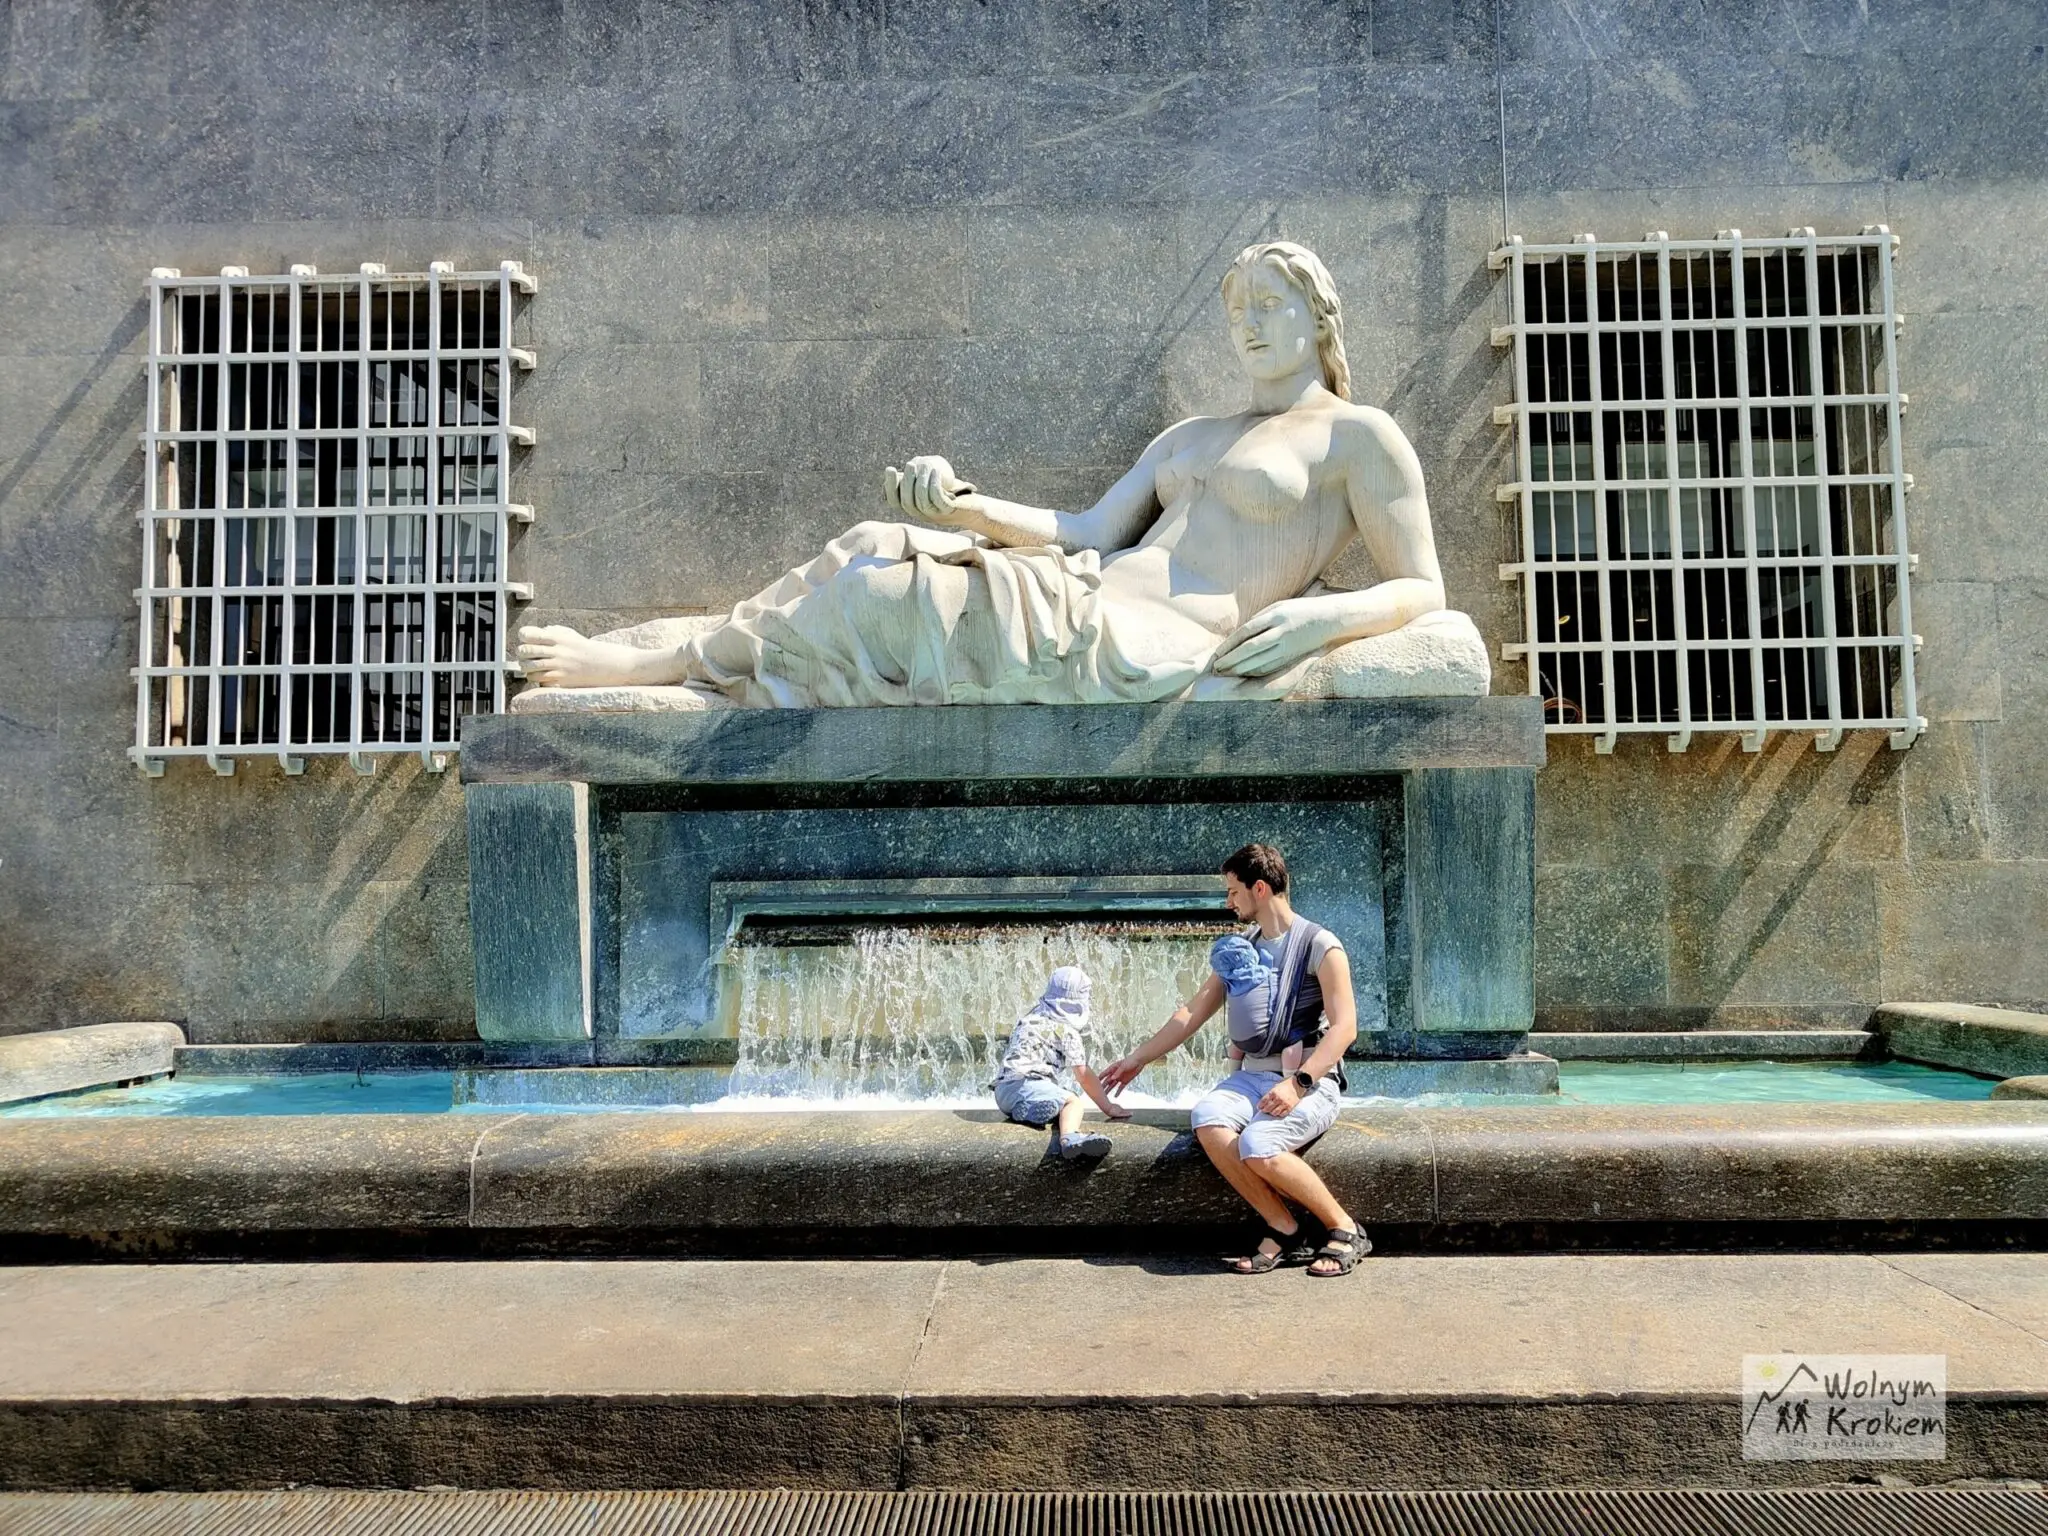 Turin fountain